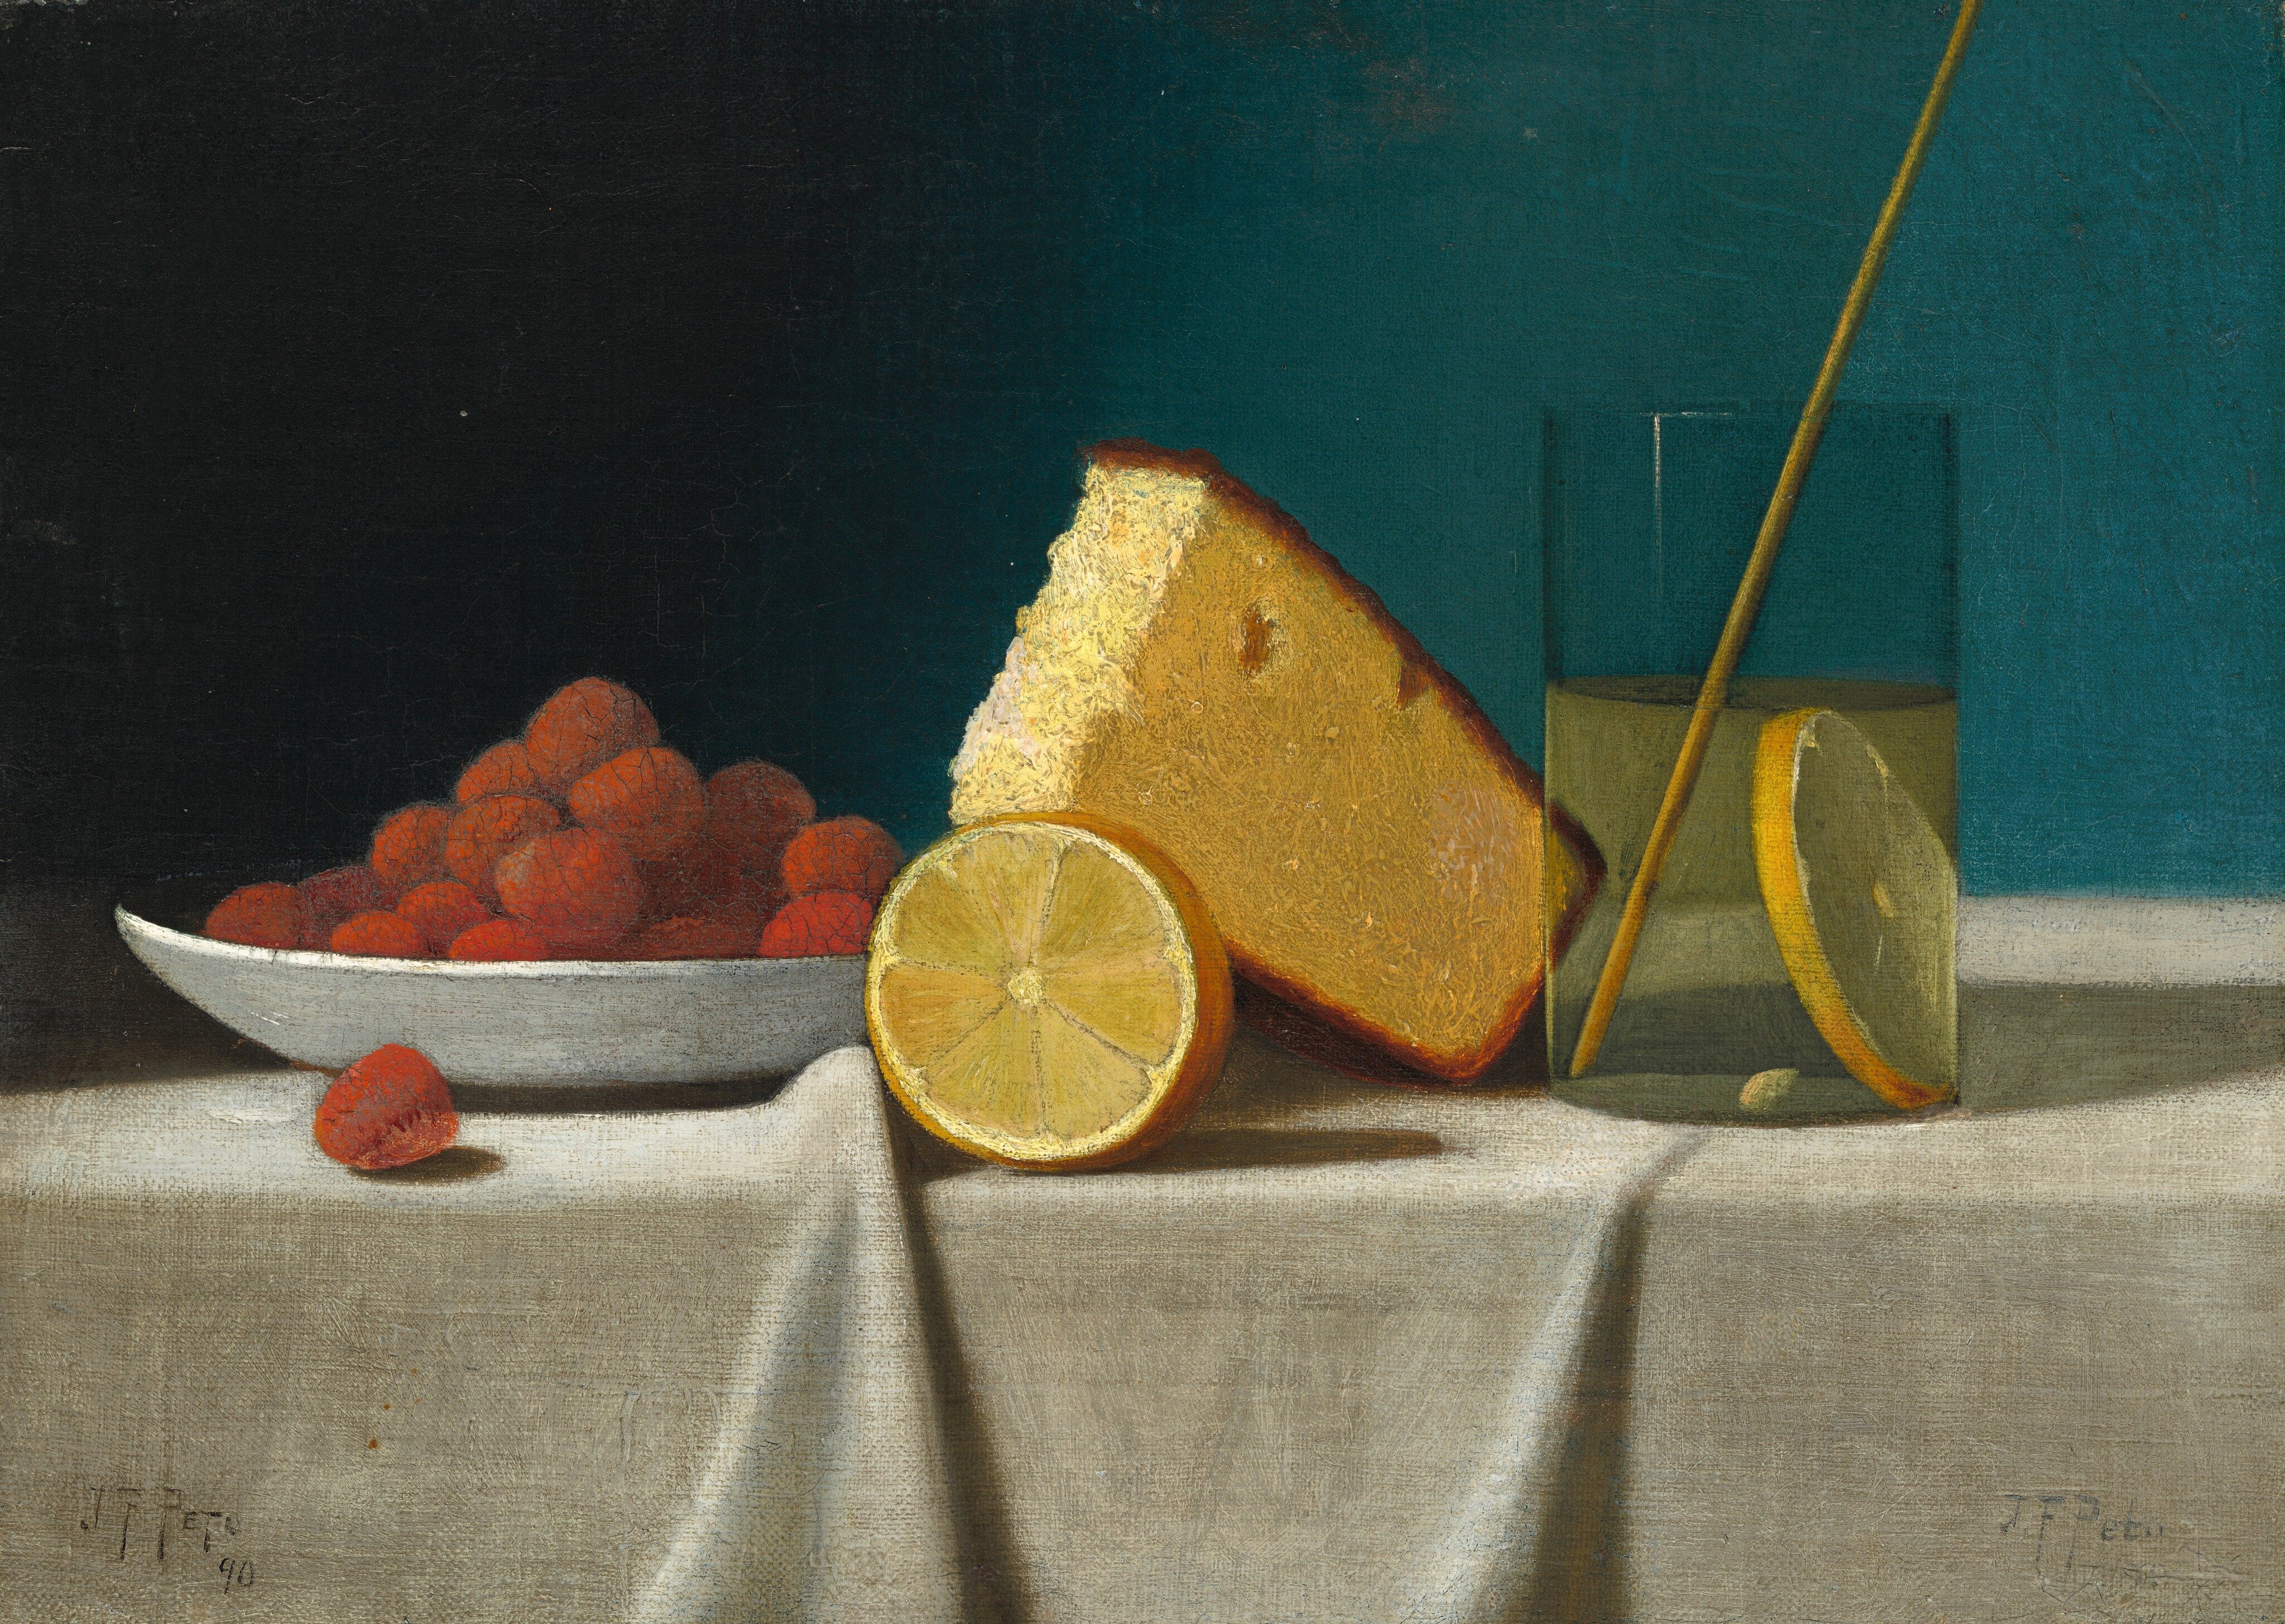  <em>Still Life with Cake, Lemon, Strawberries, and Glass</em> by John Frederick Peto, 1890.